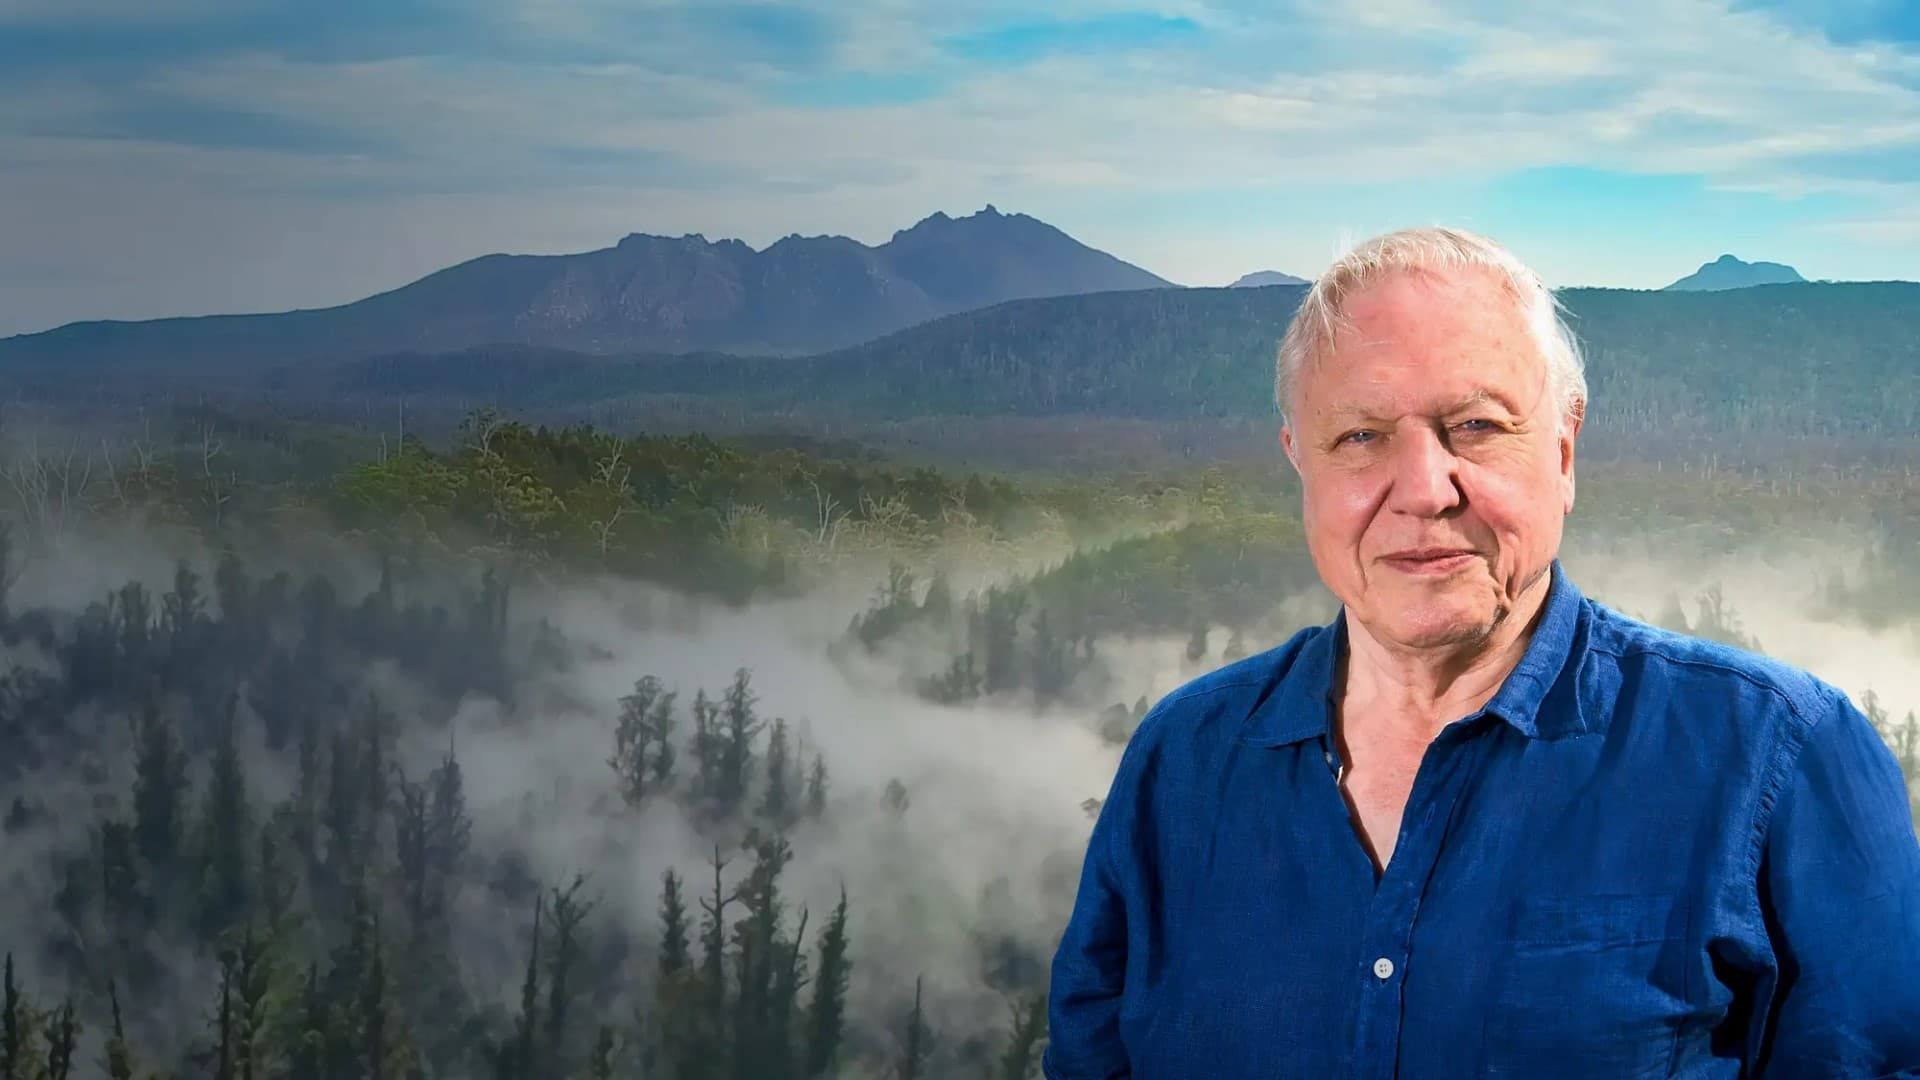 David Attenborough's Tasmania background